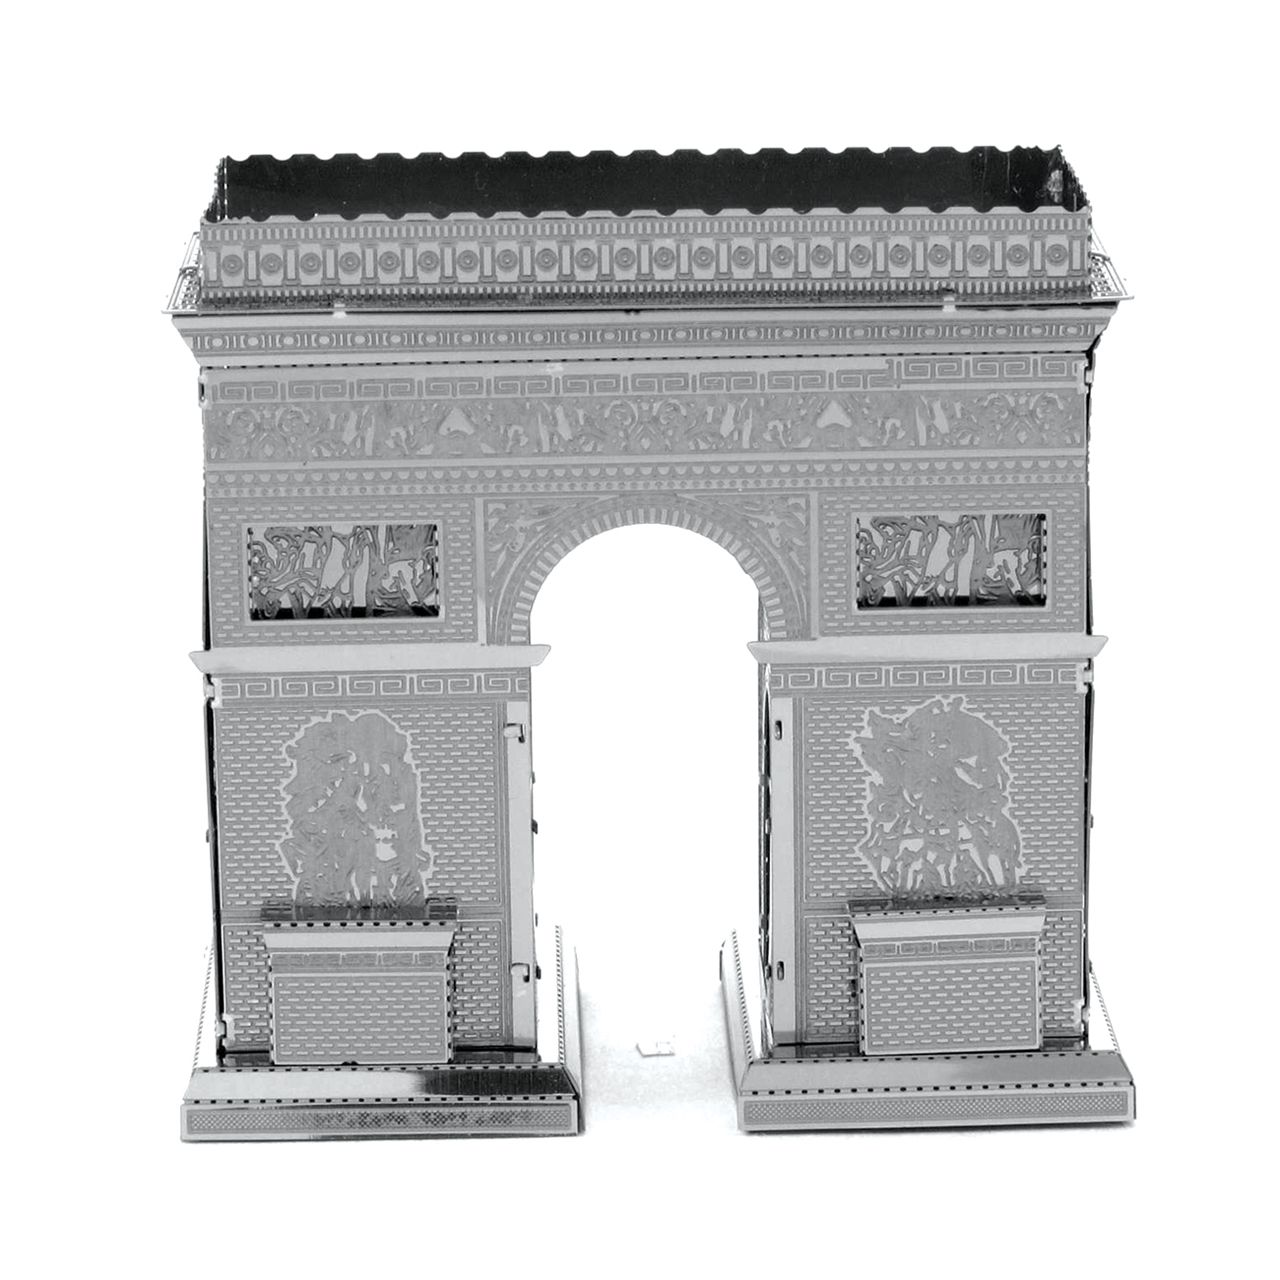 Metal Earth Arc de Triomphe 3D Metal Model Kit